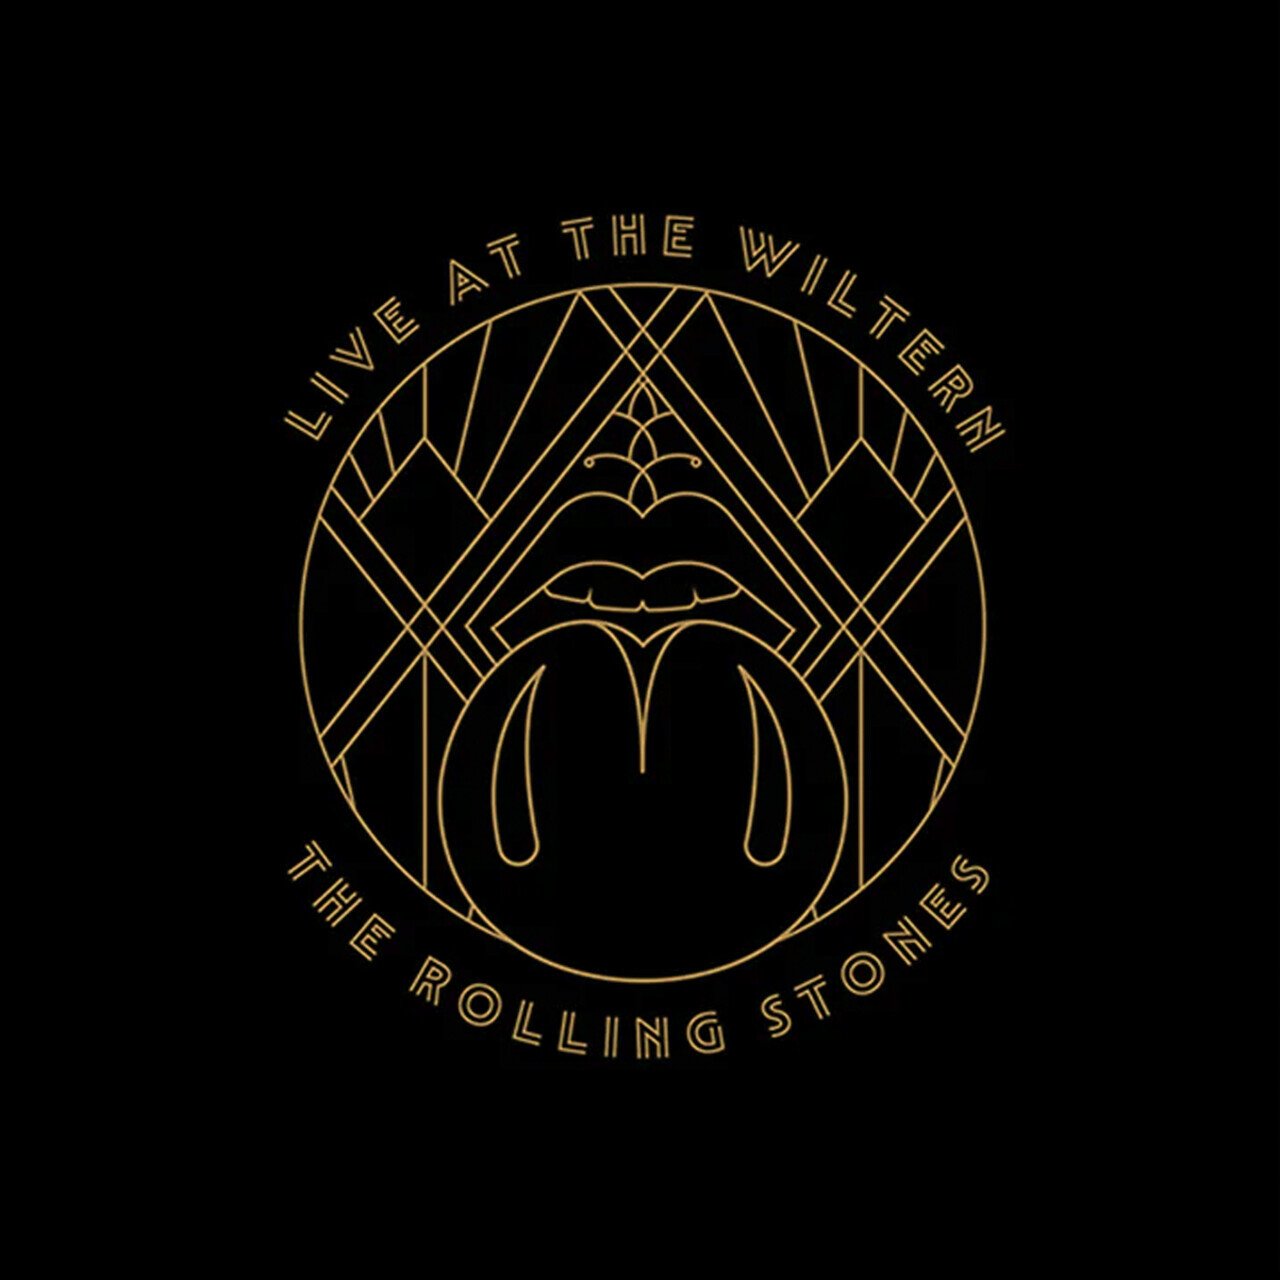 Рок Universal (Aus) Rolling Stones, The - Live At The Wiltern (Black Vinyl 3LP)